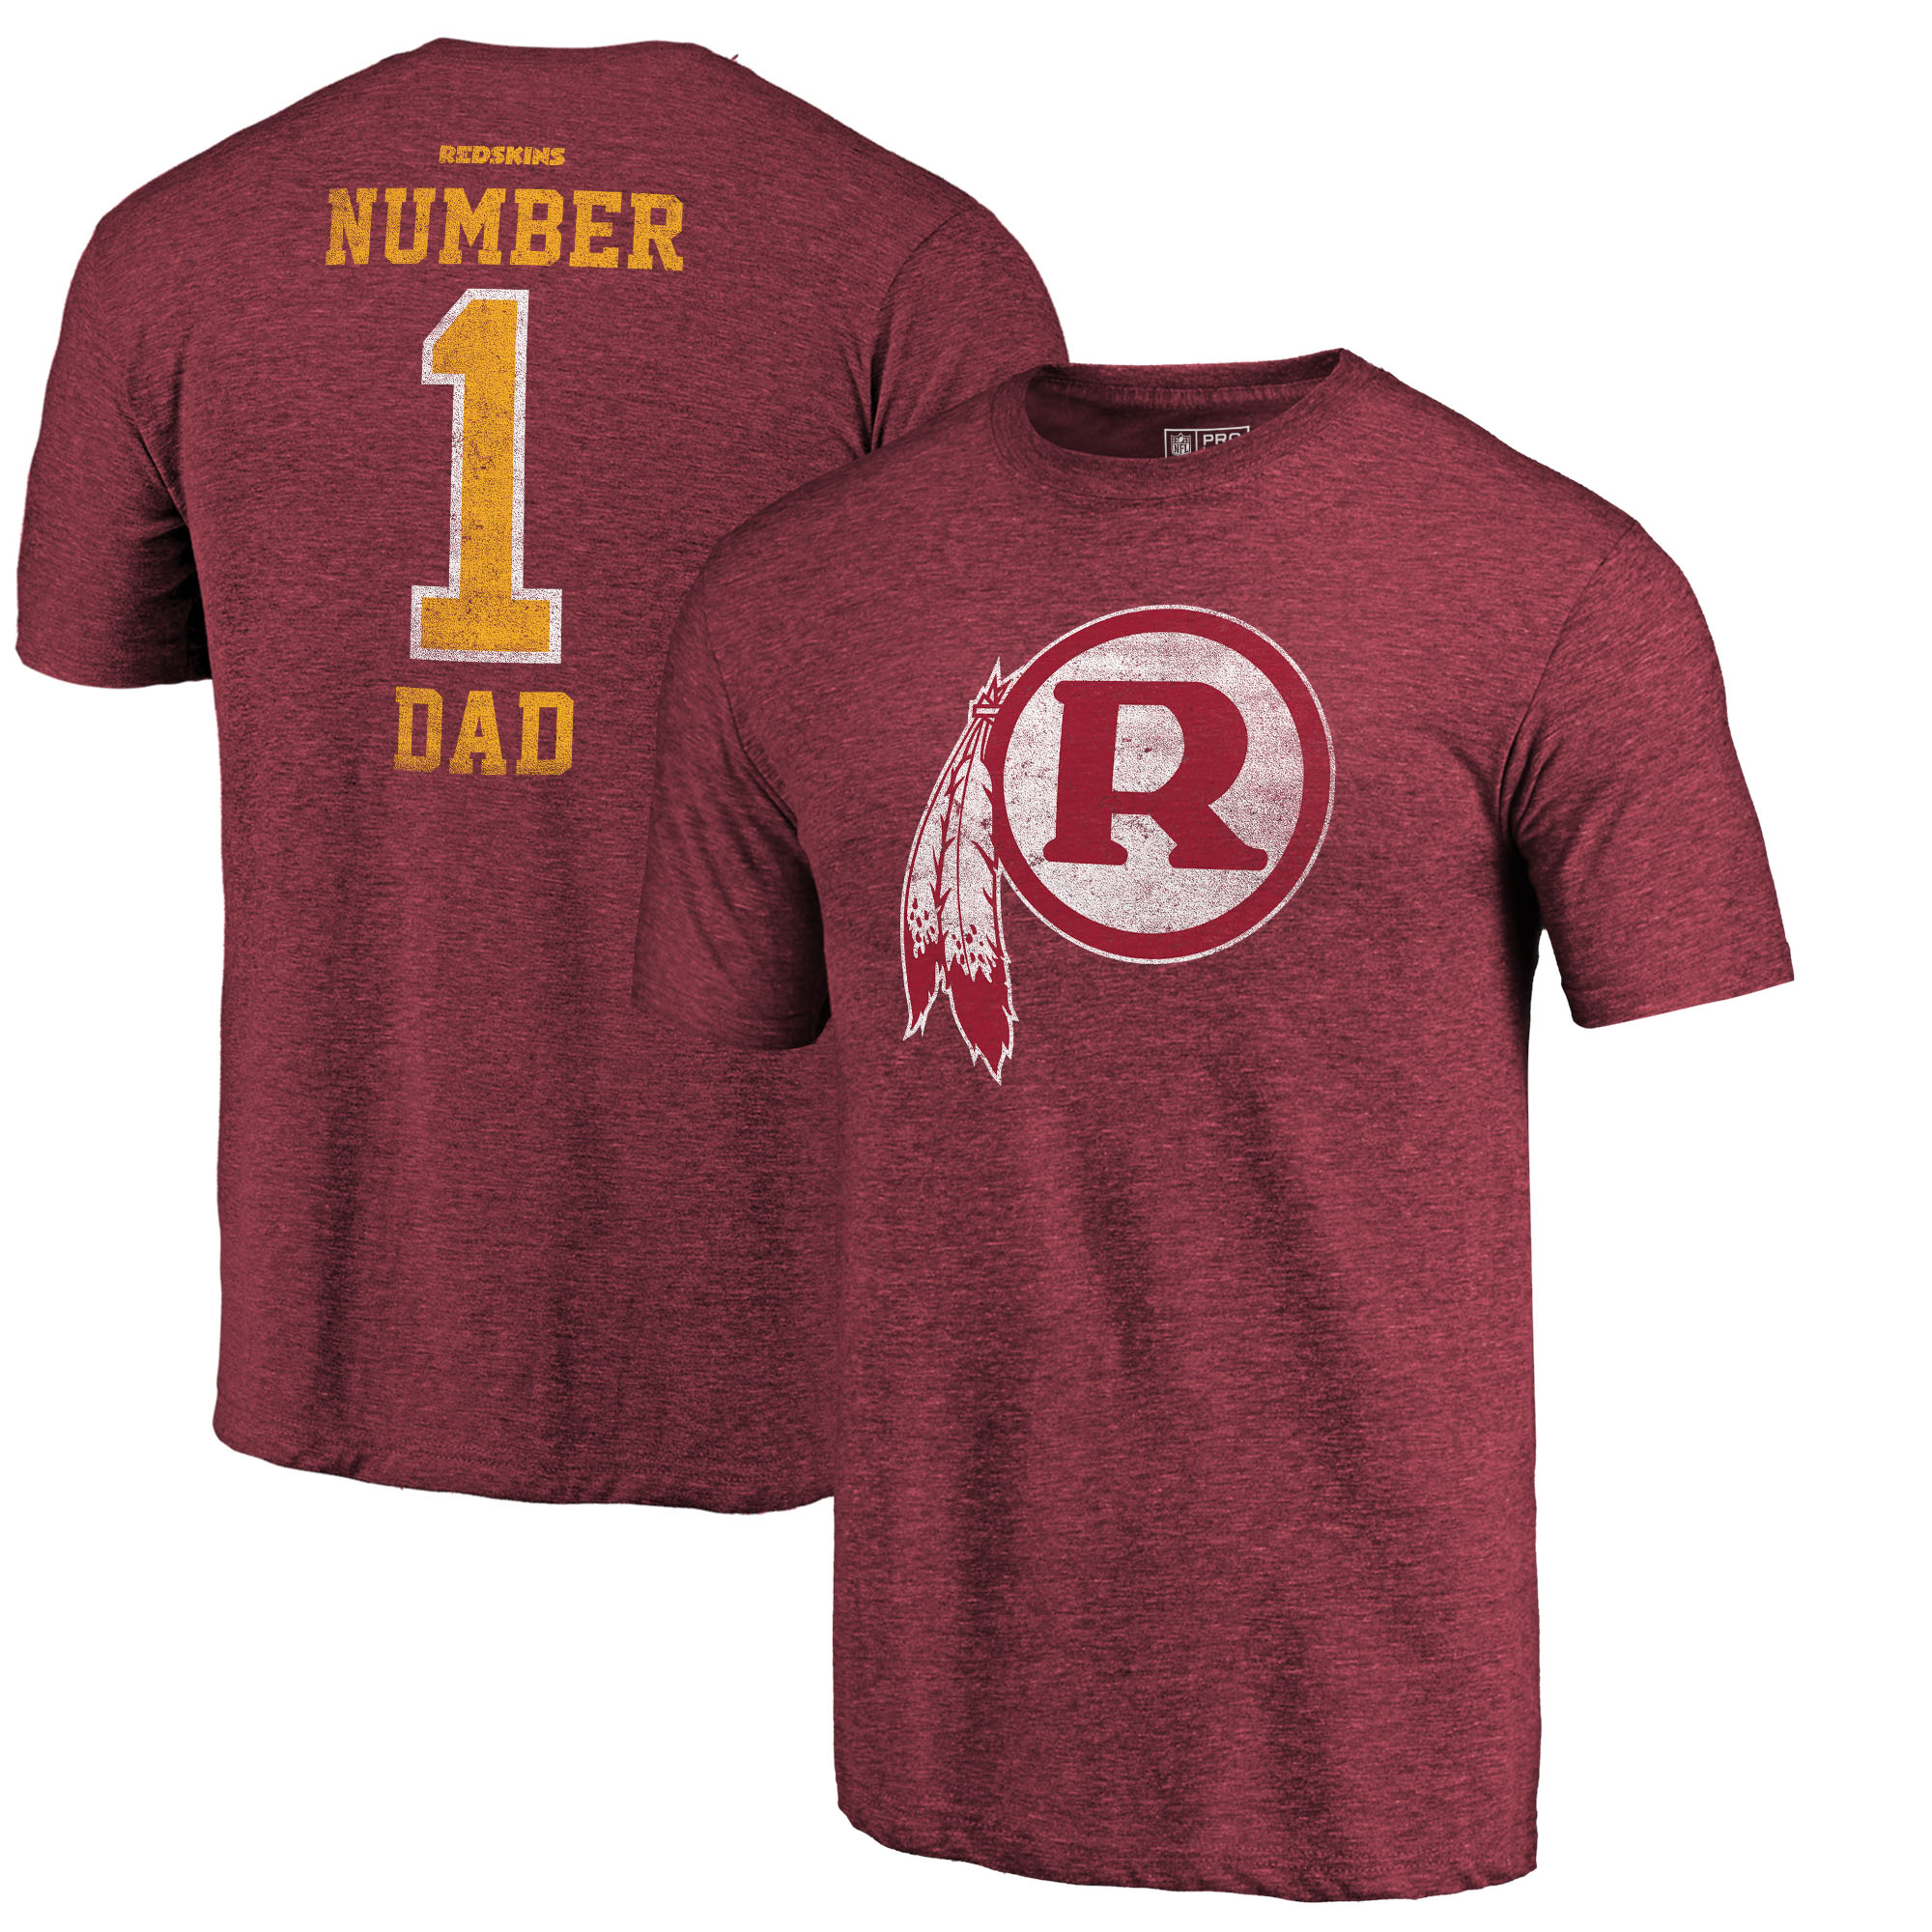 Washington Redskins NFL Pro Line by Fanatics Branded Burgundy Greatest Dad Retro Tri-Blend T-Shirt